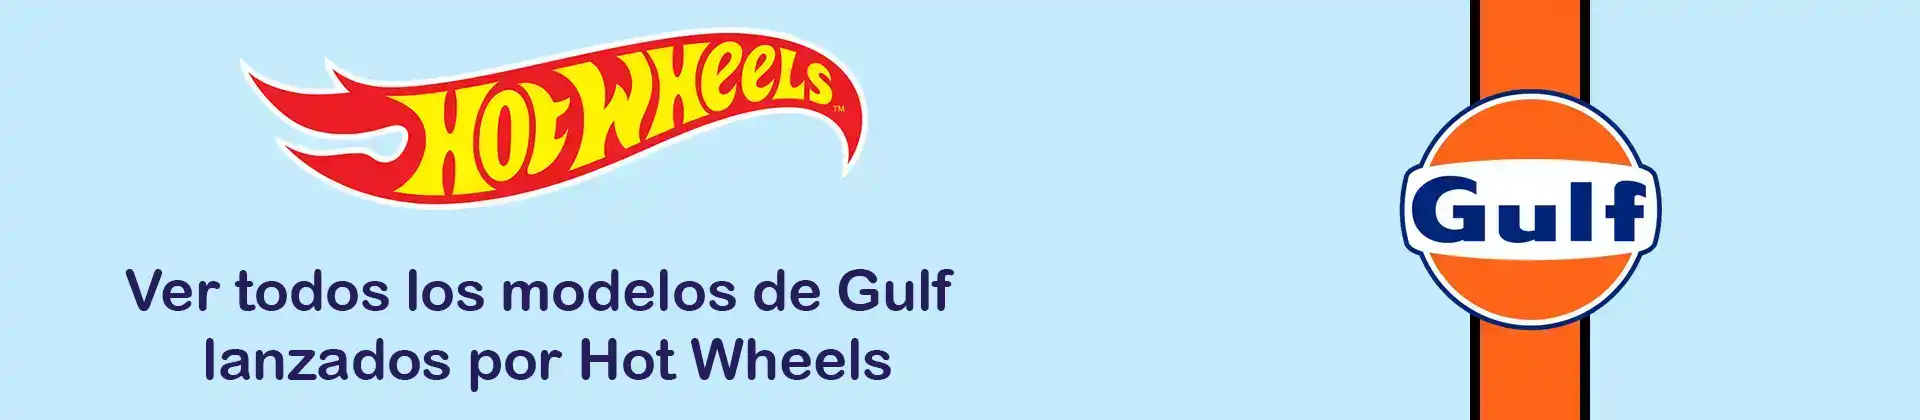 hot wheels gulf